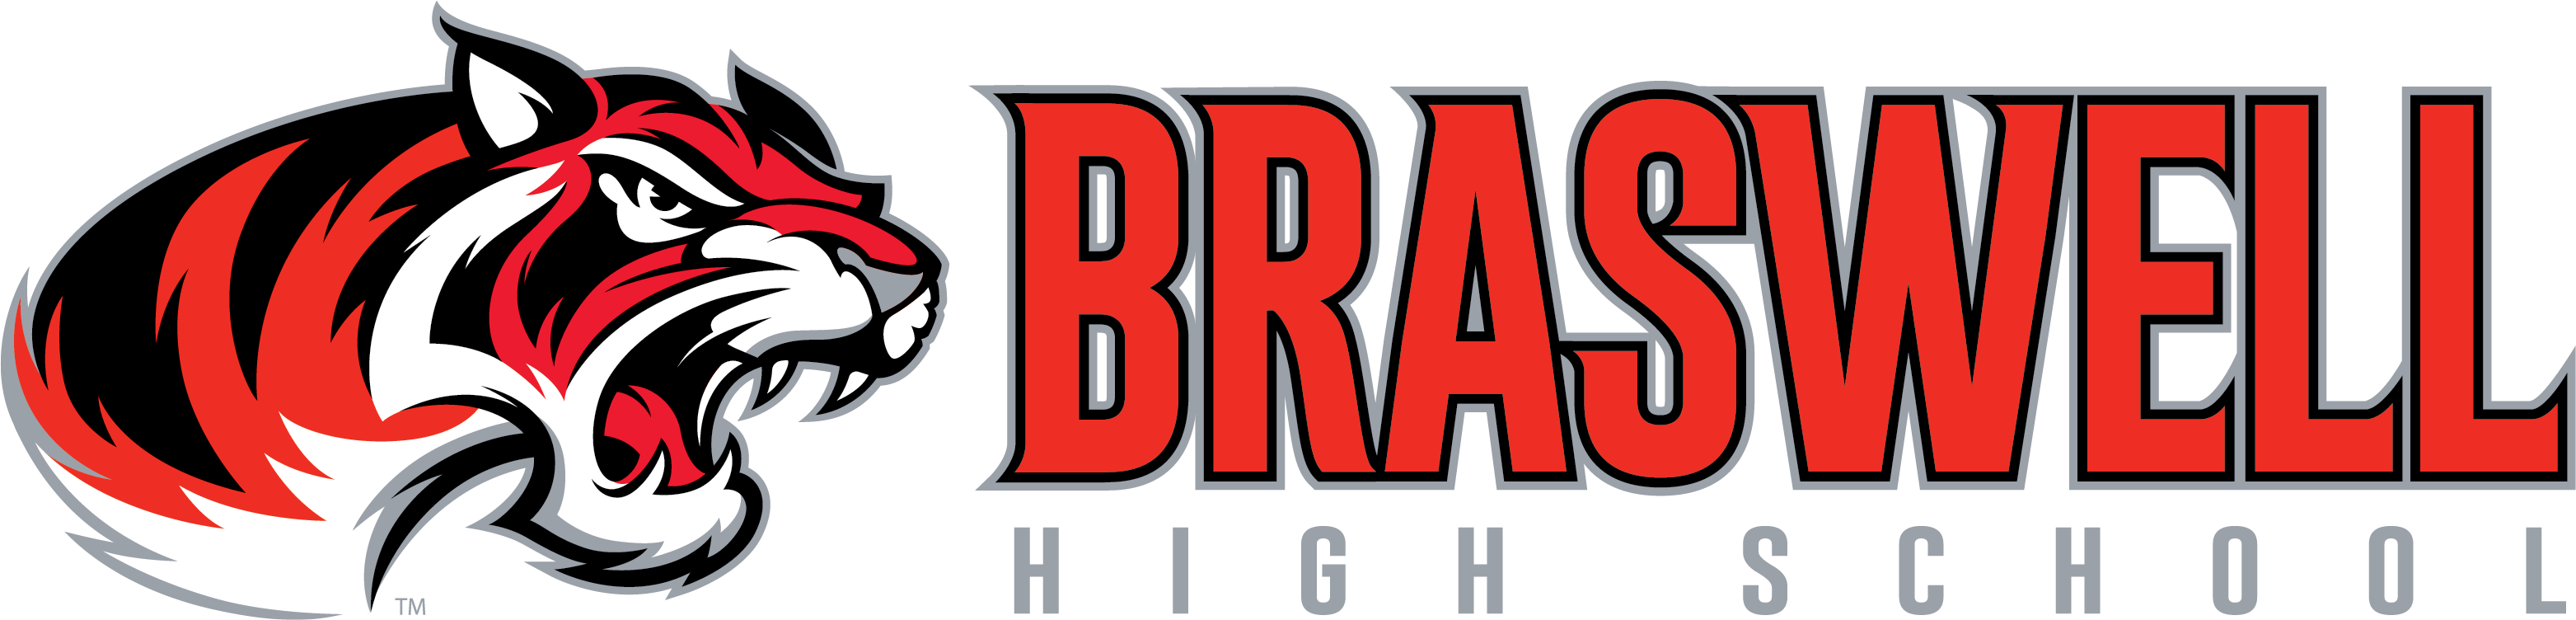 Braswell High School logo